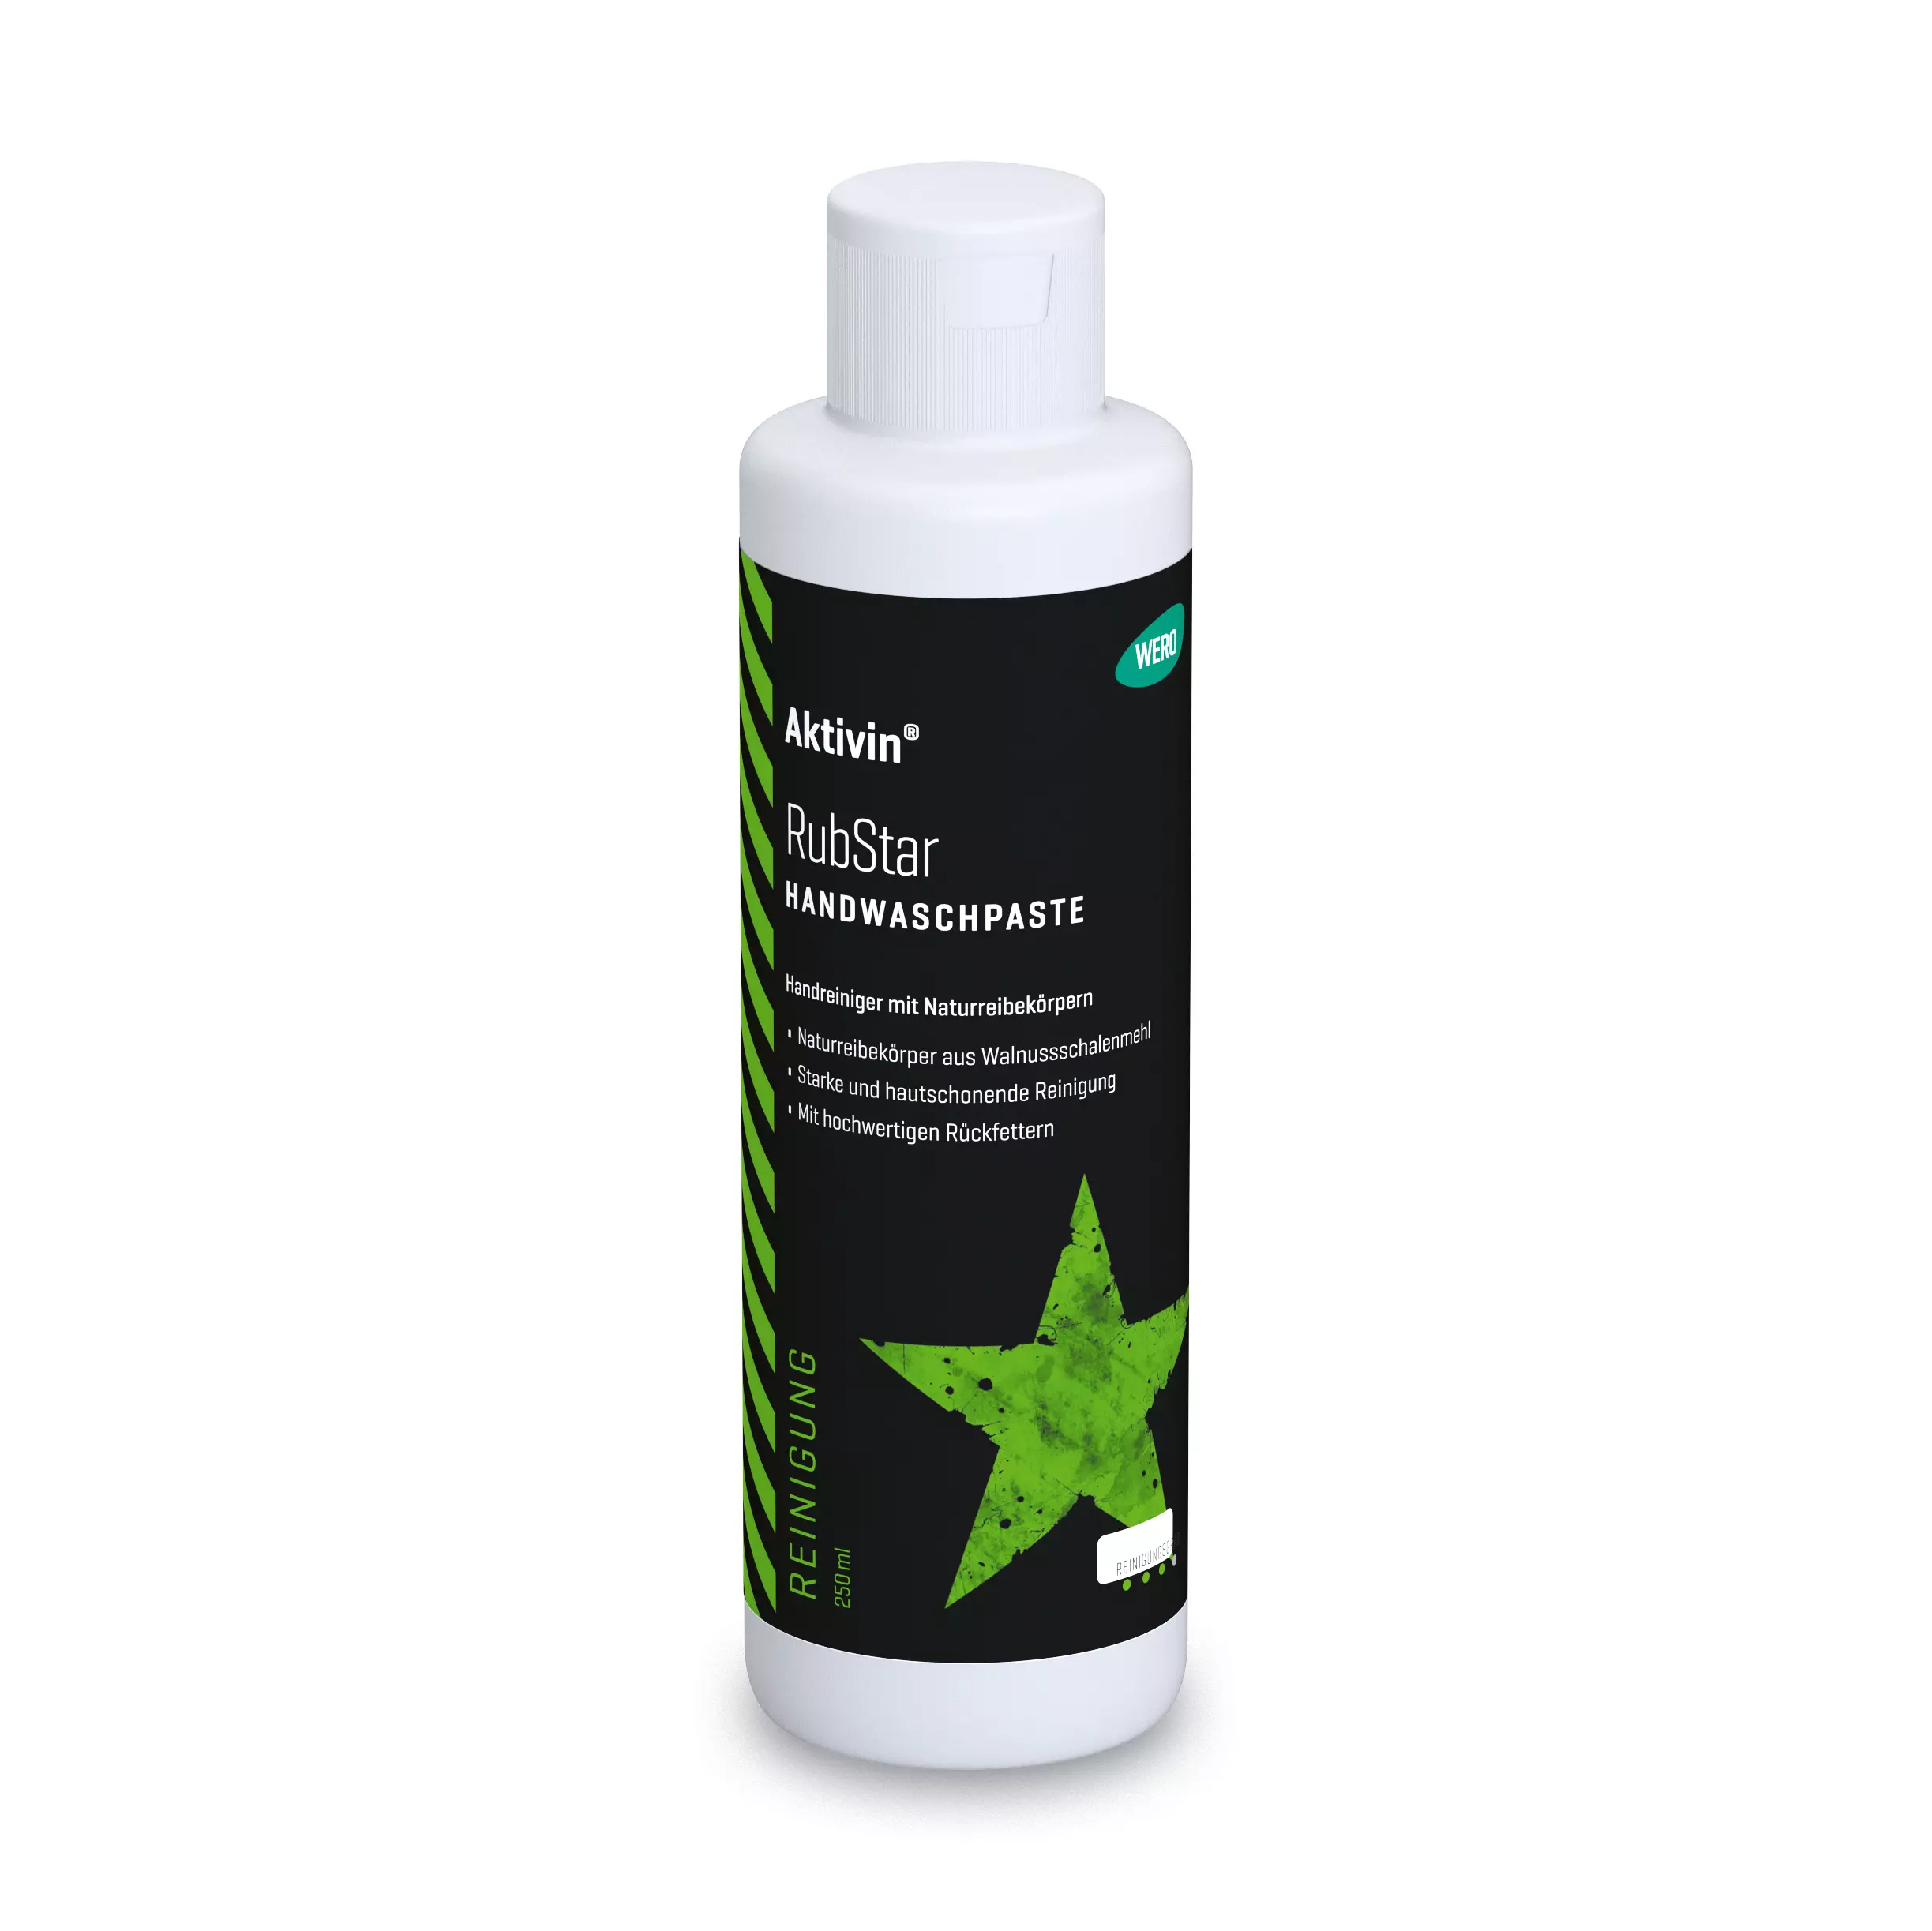 Hautreinigung Aktivin® RubStar - Flasche, 250 ml